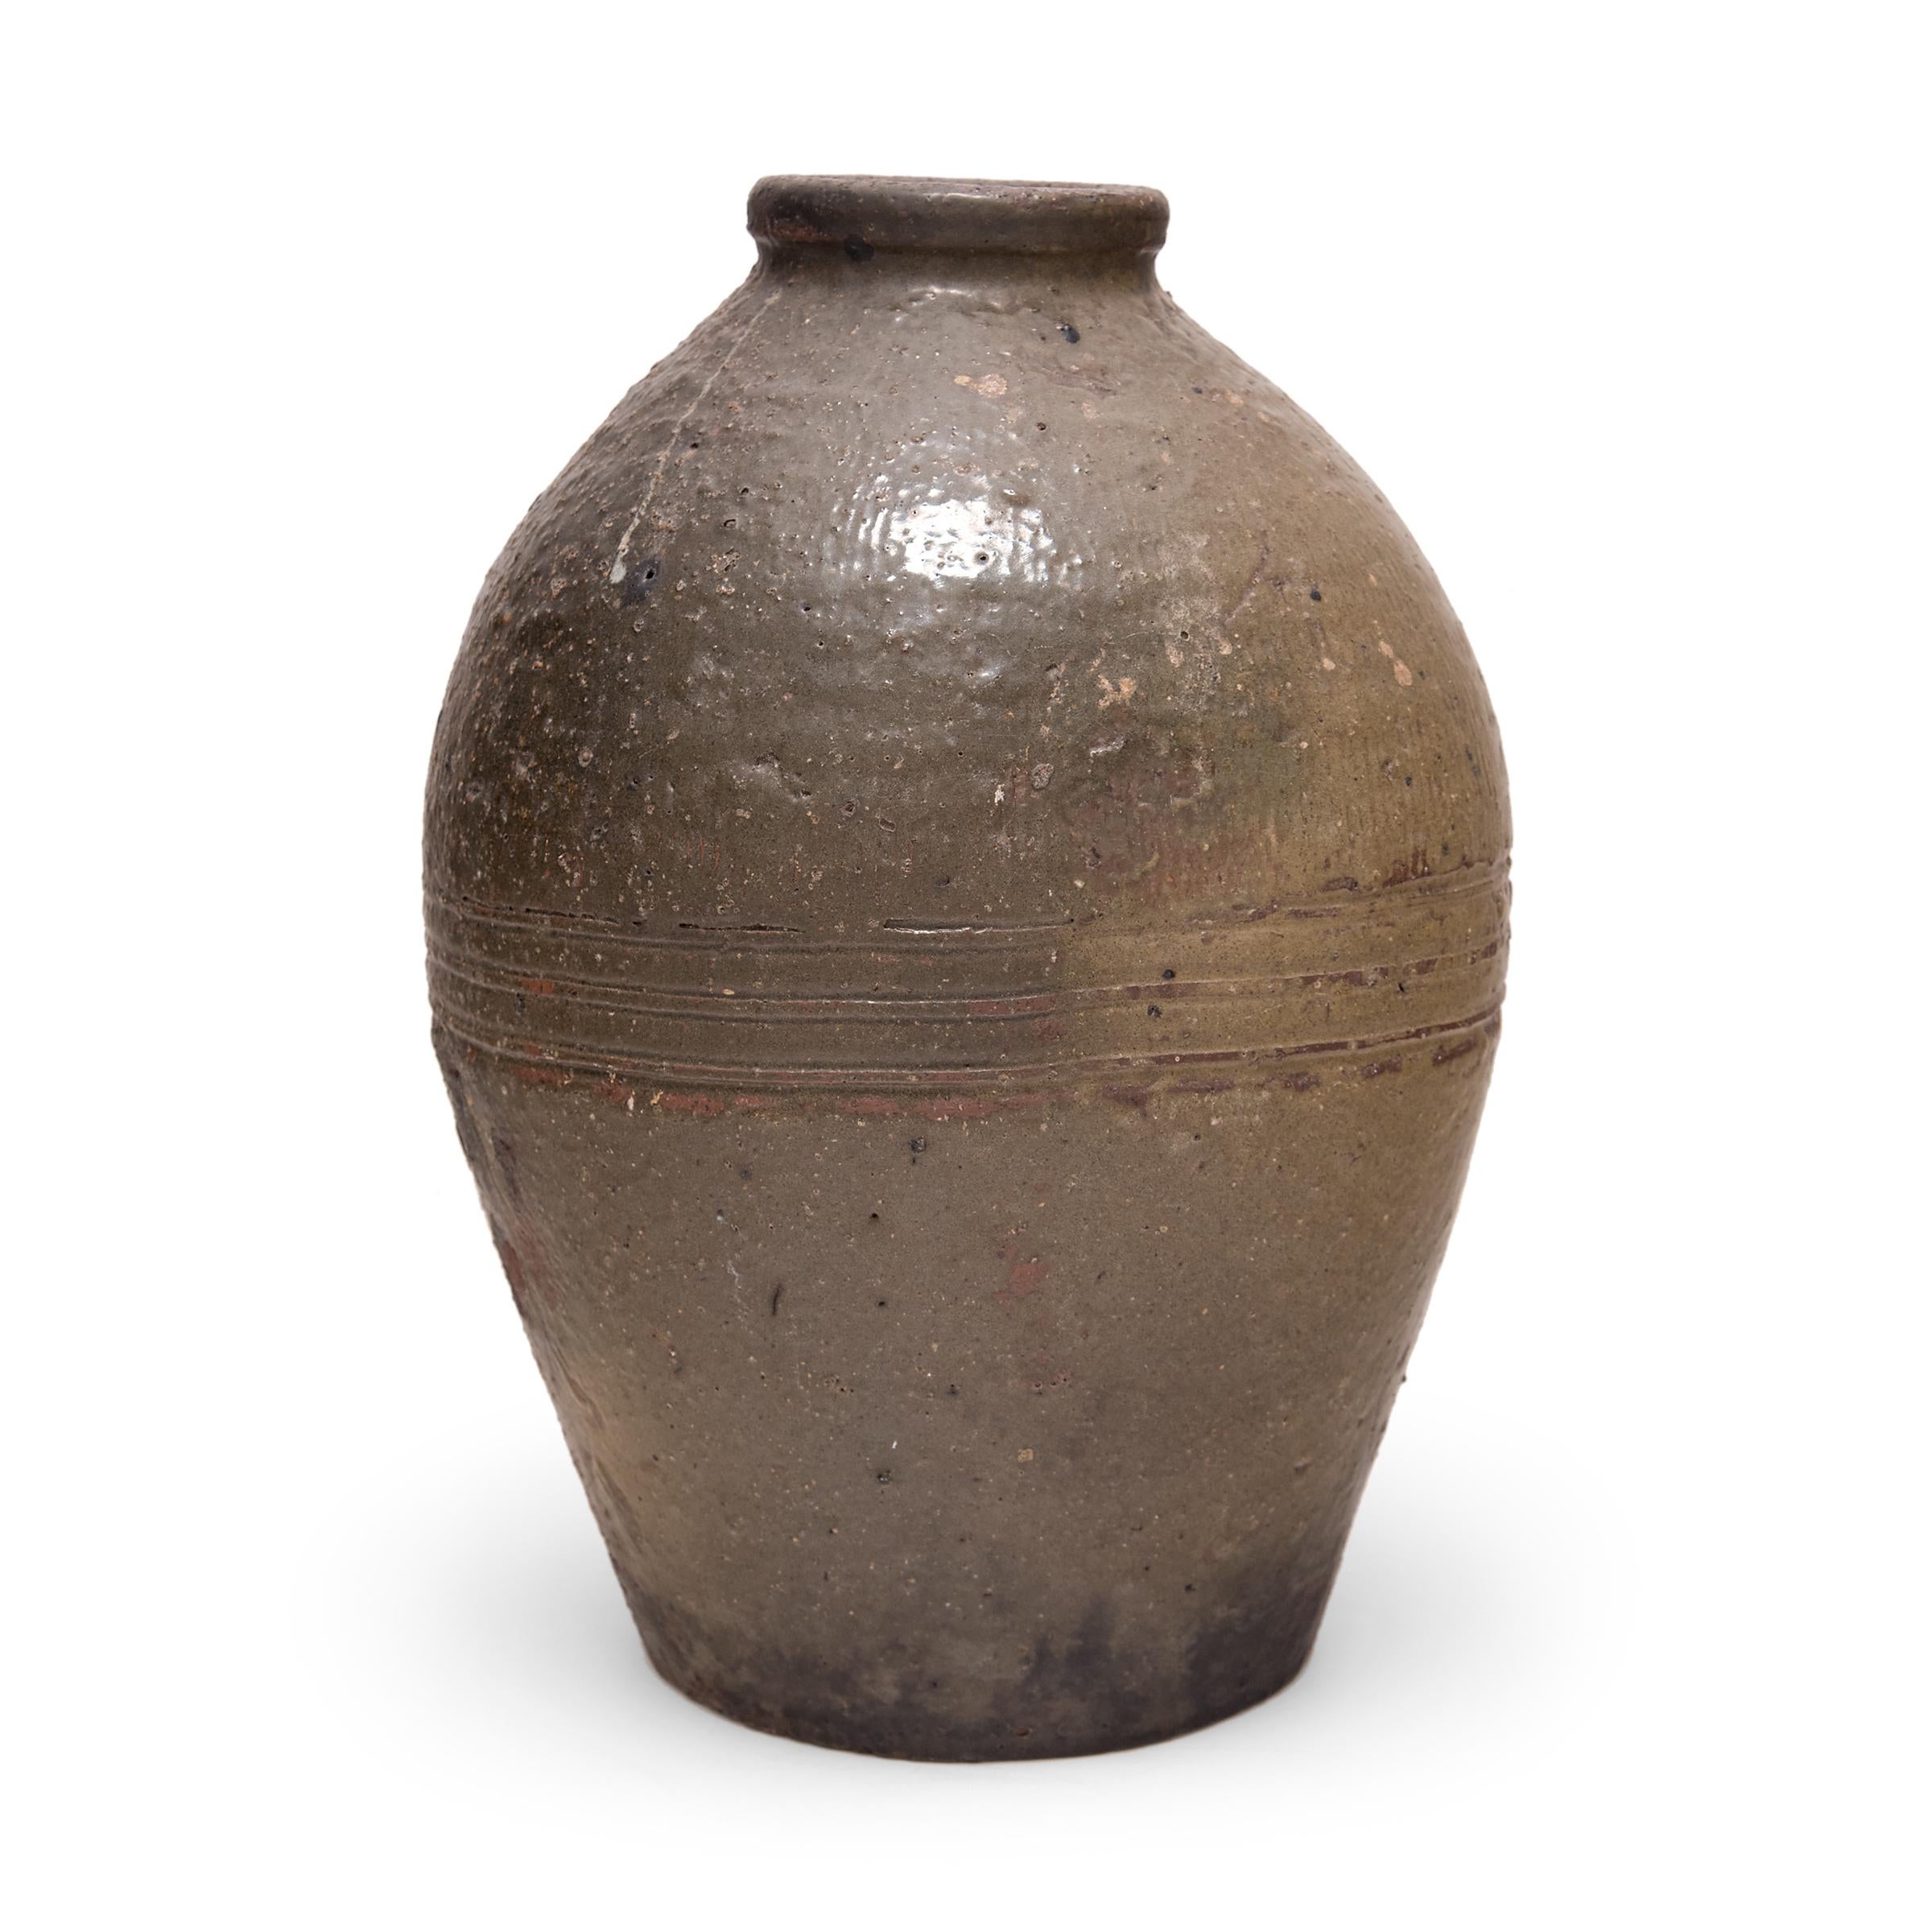 Rustic Provincial Chinese Wine Jar, c. 1900